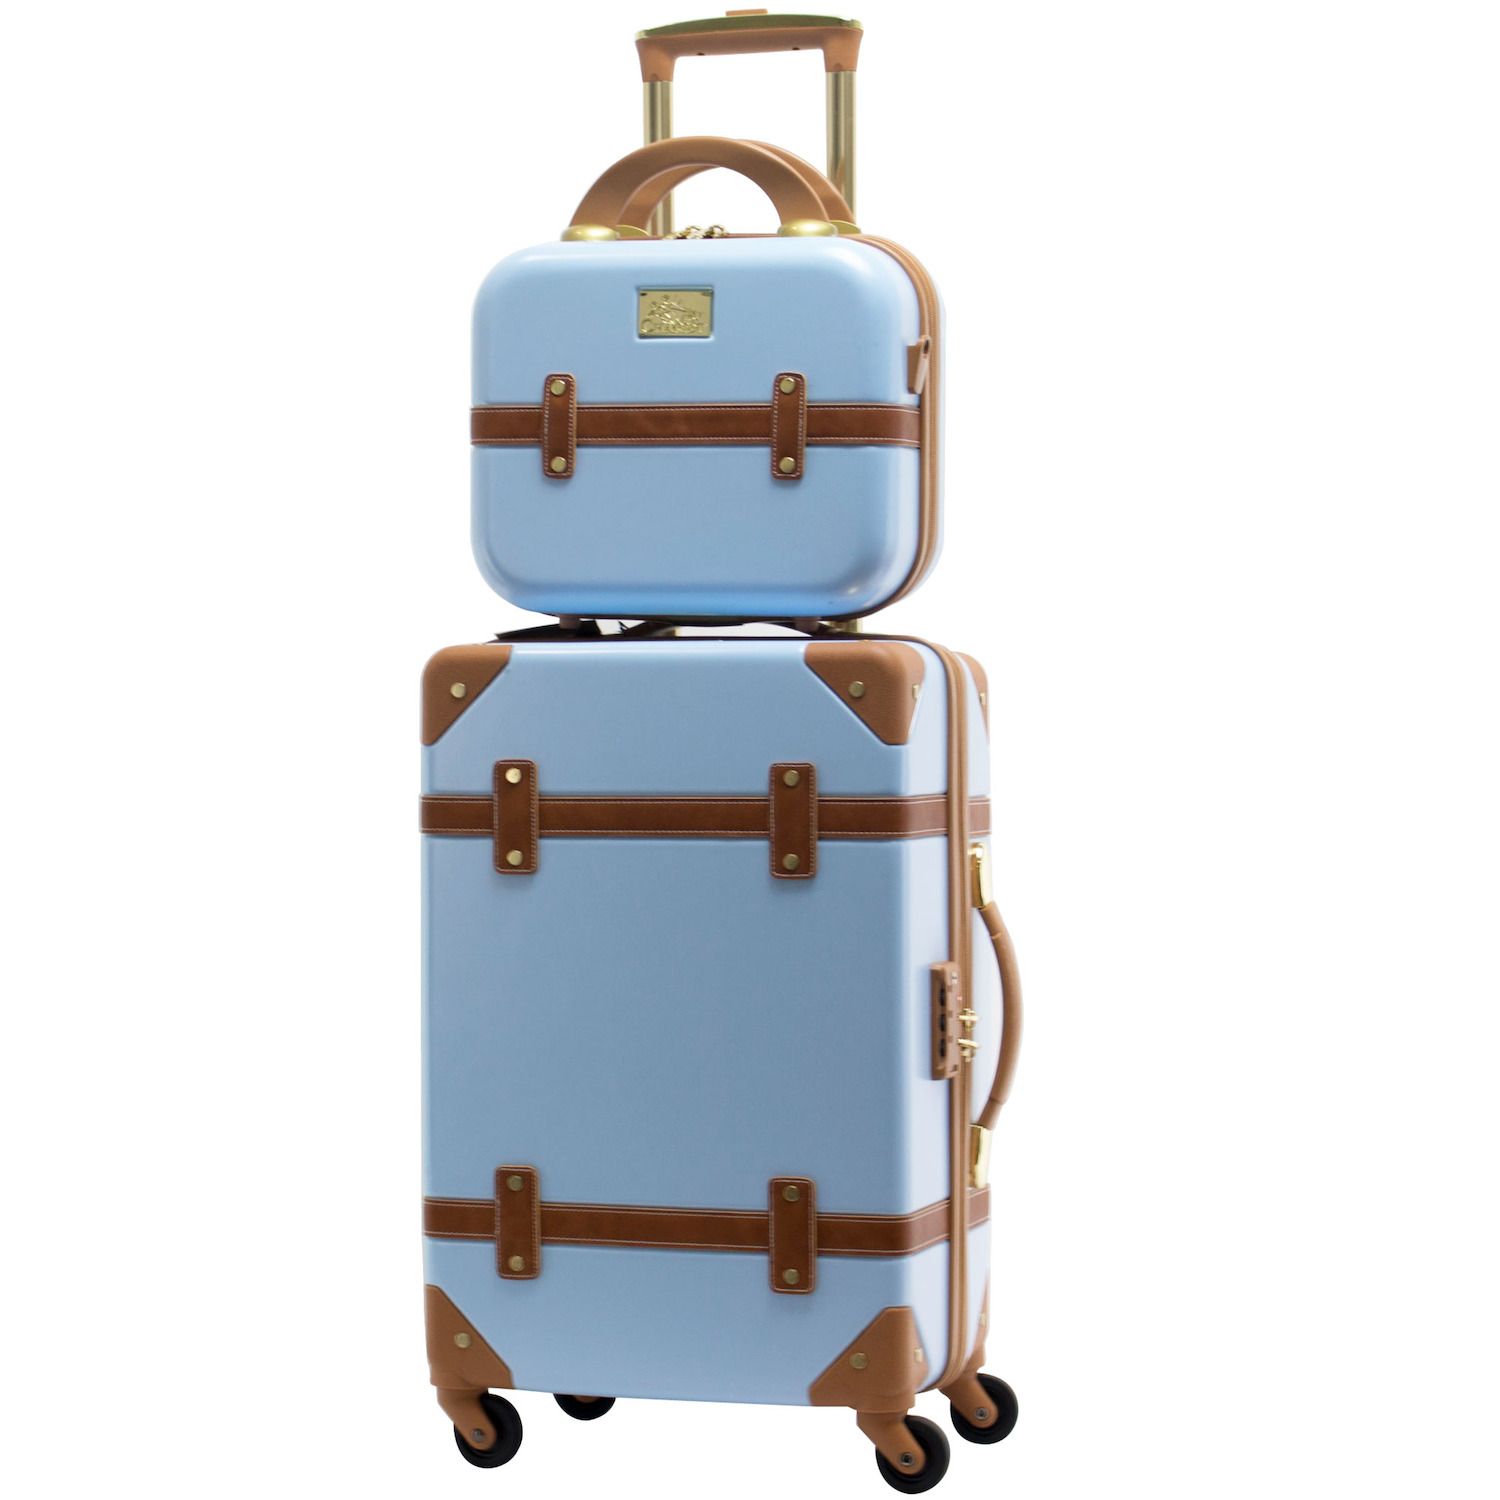 2 piece luggage sets